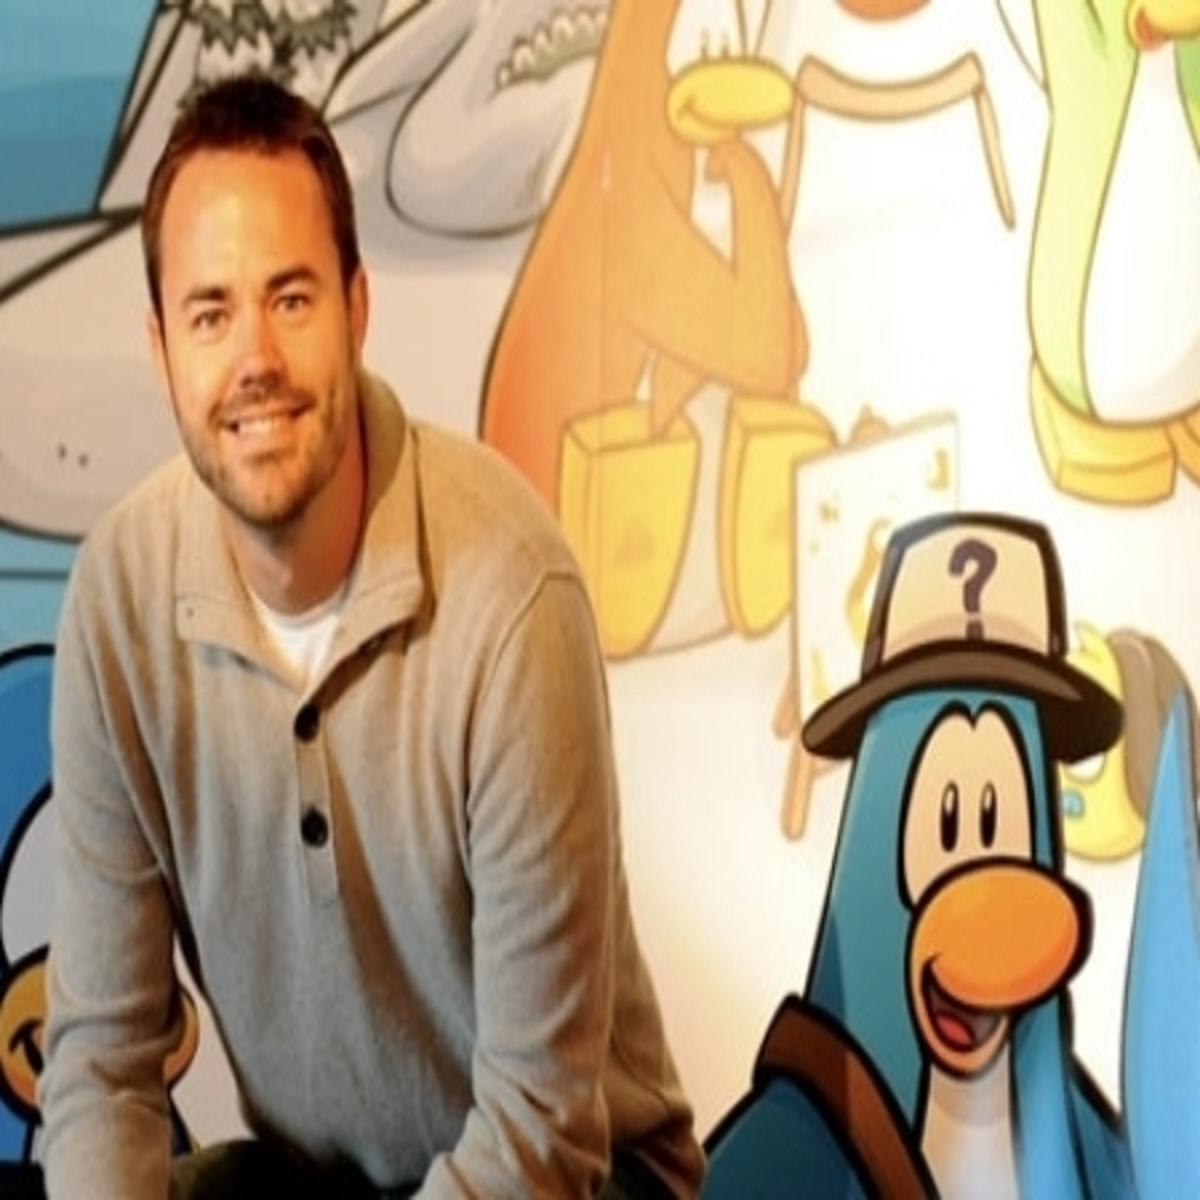 Disney Interactive loses Club Penguin founder Lane Merrifield